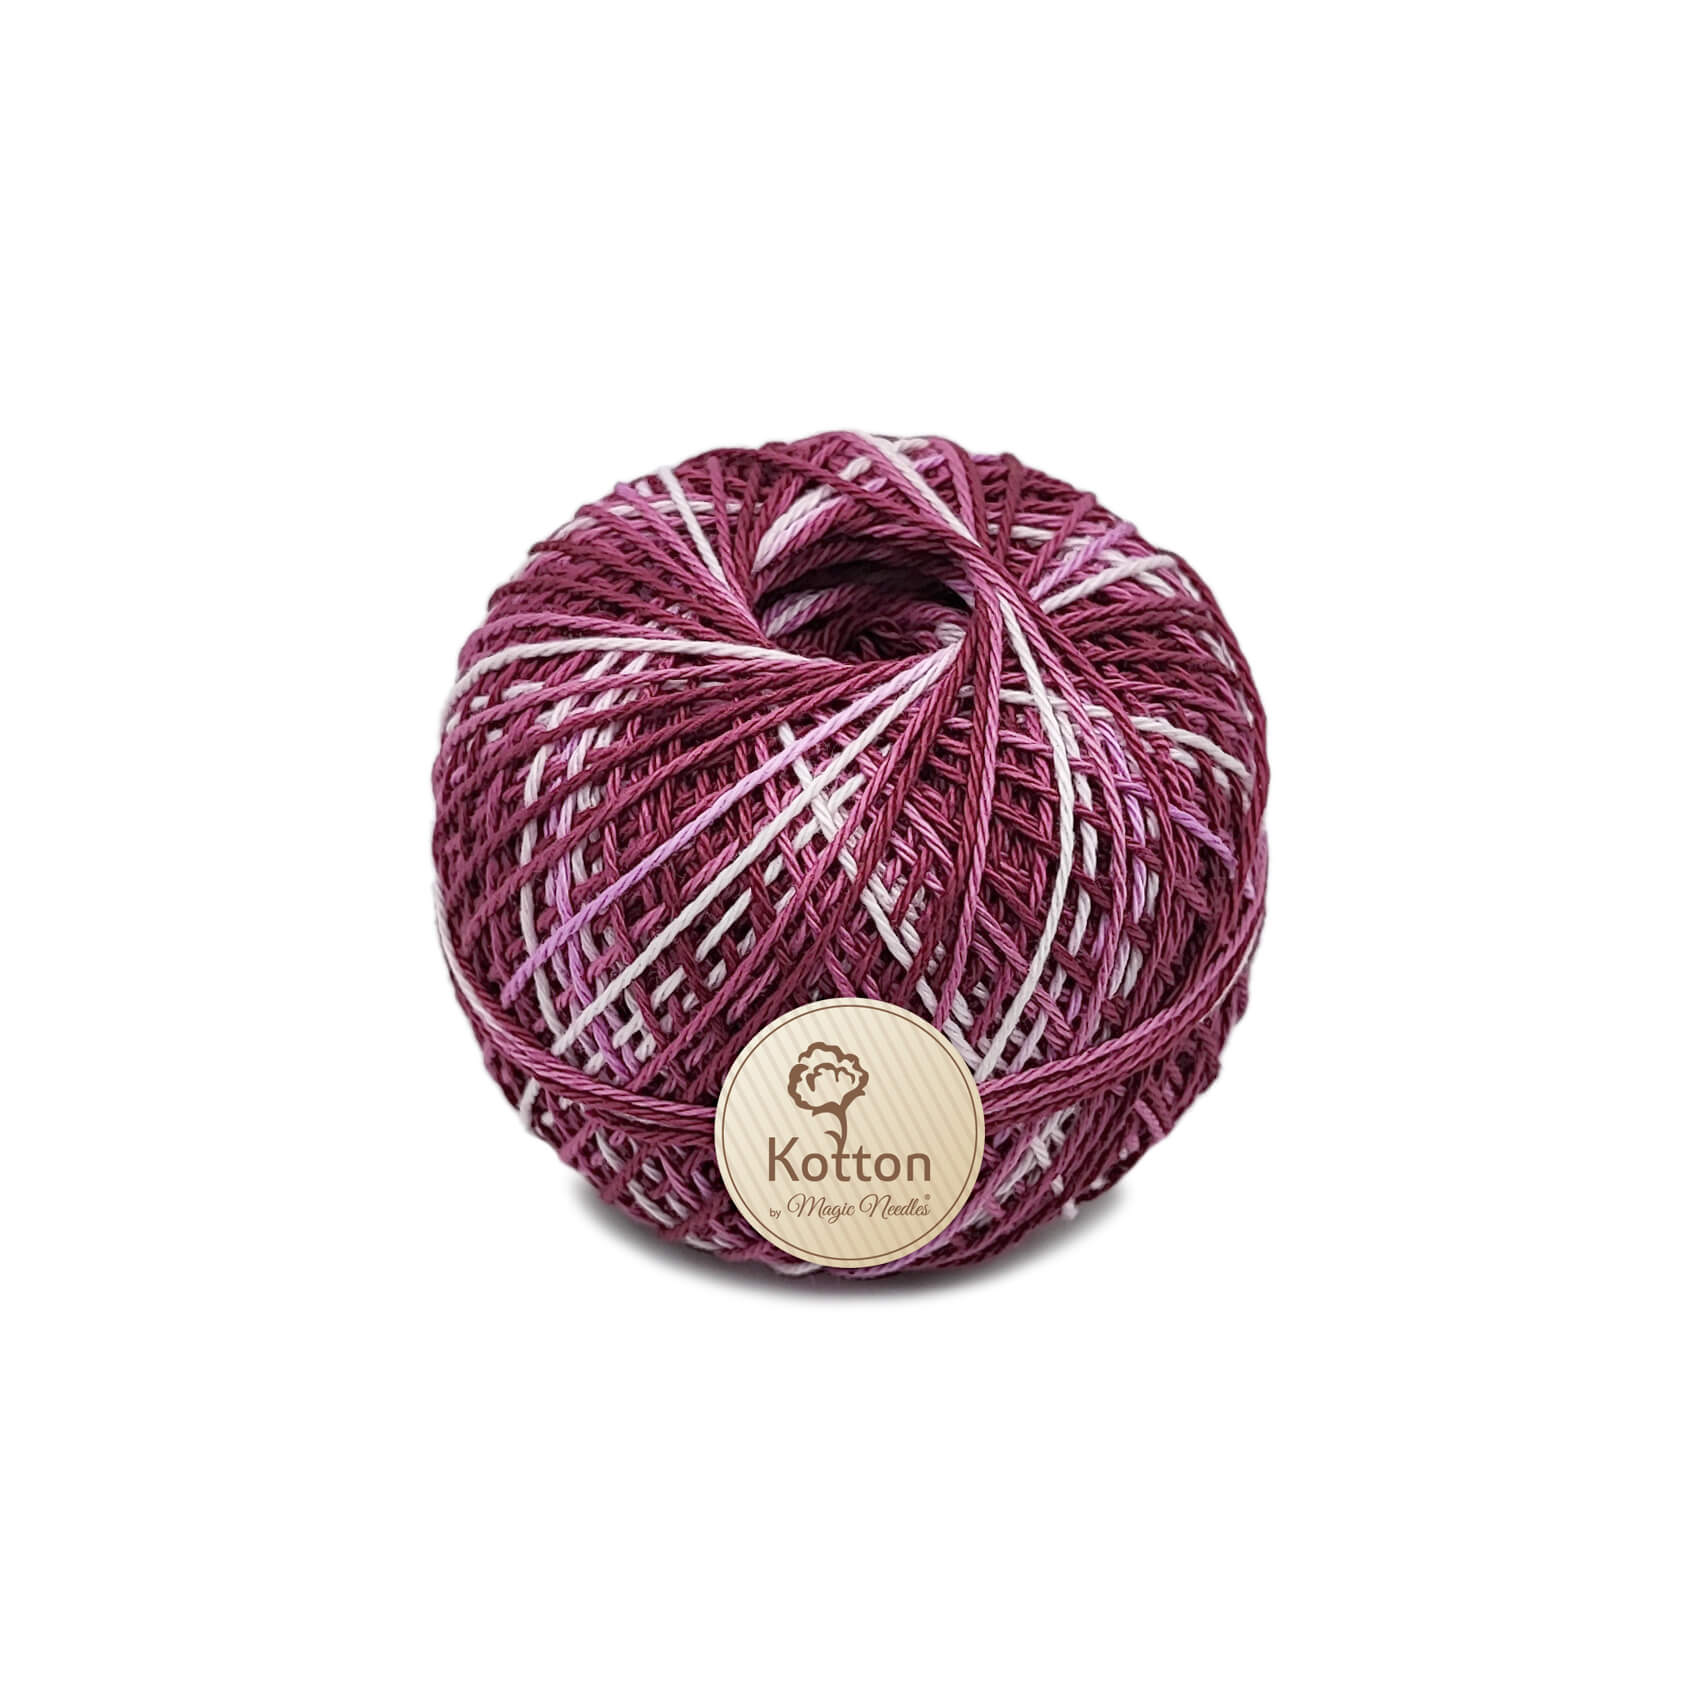 Kotton 3 ply Mercerised Cotton Yarn - Multi Color 02